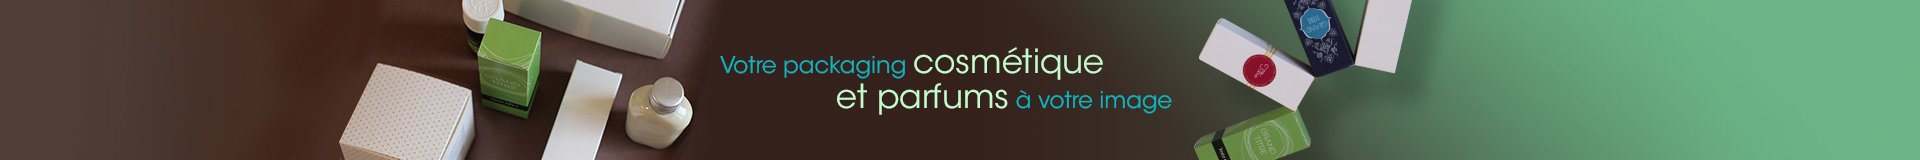 Impression packaging cosmetique et parfum